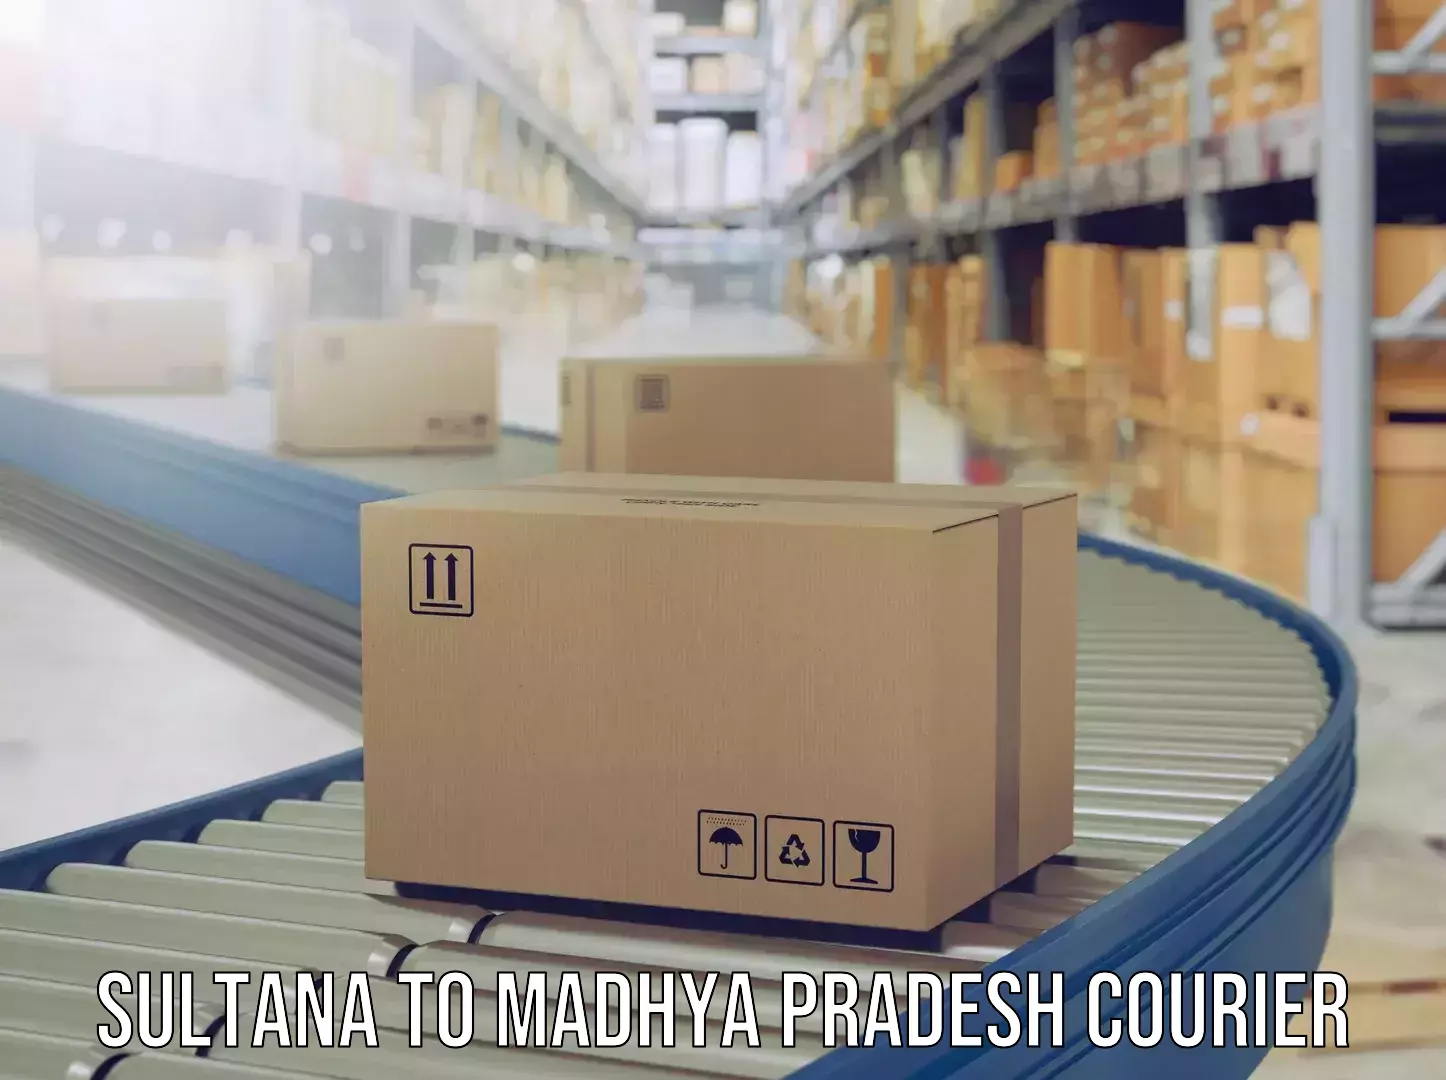 Luggage shipment specialists Sultana to Madhya Pradesh